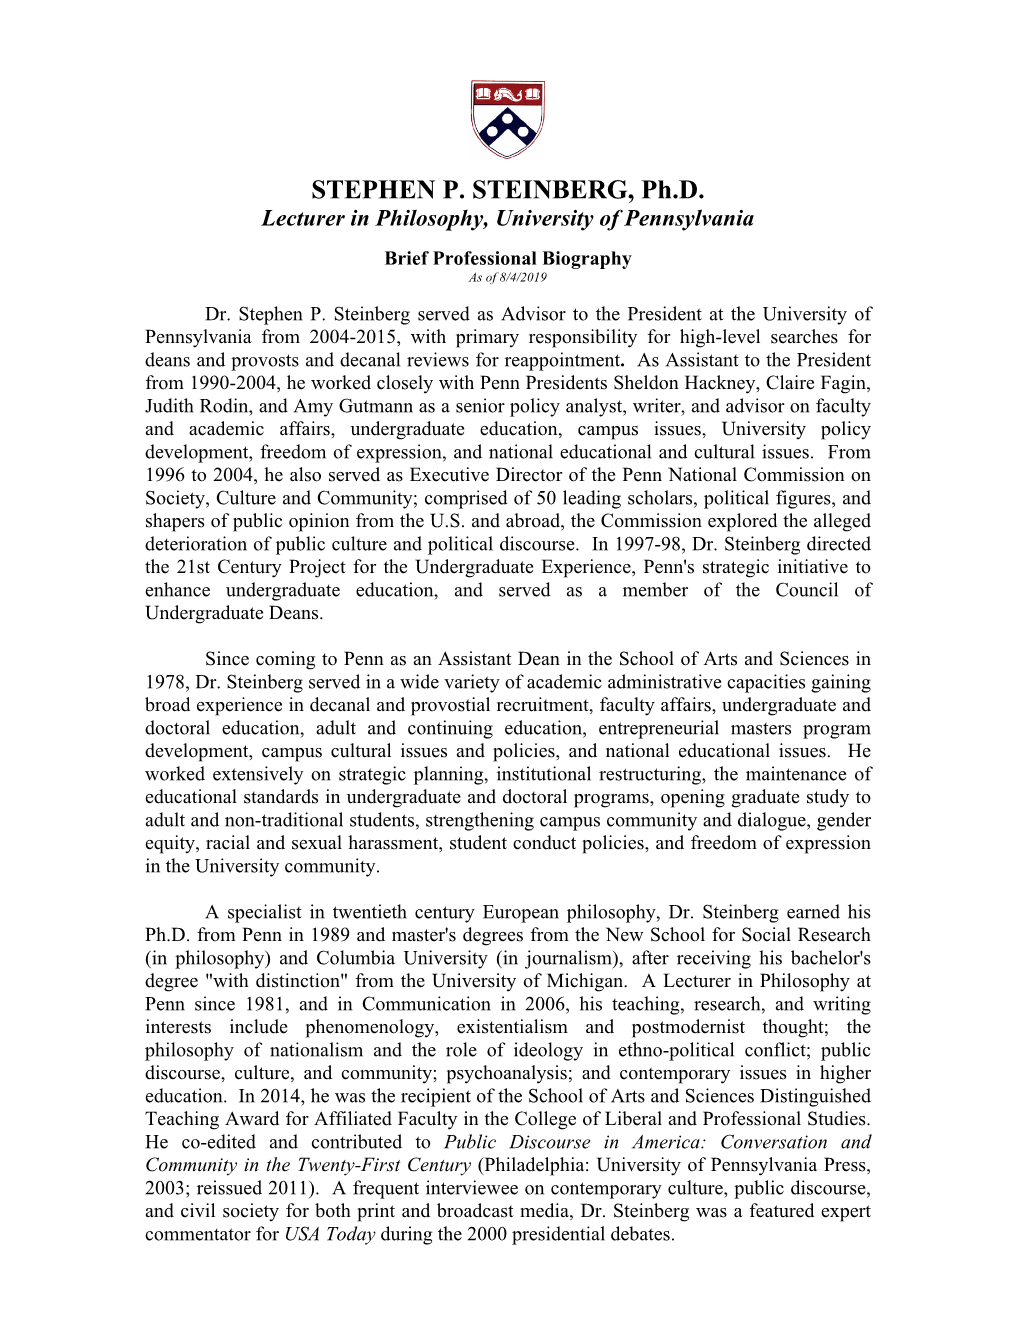 STEPHEN P. STEINBERG, Ph.D. Lecturer in Philosophy, University of Pennsylvania